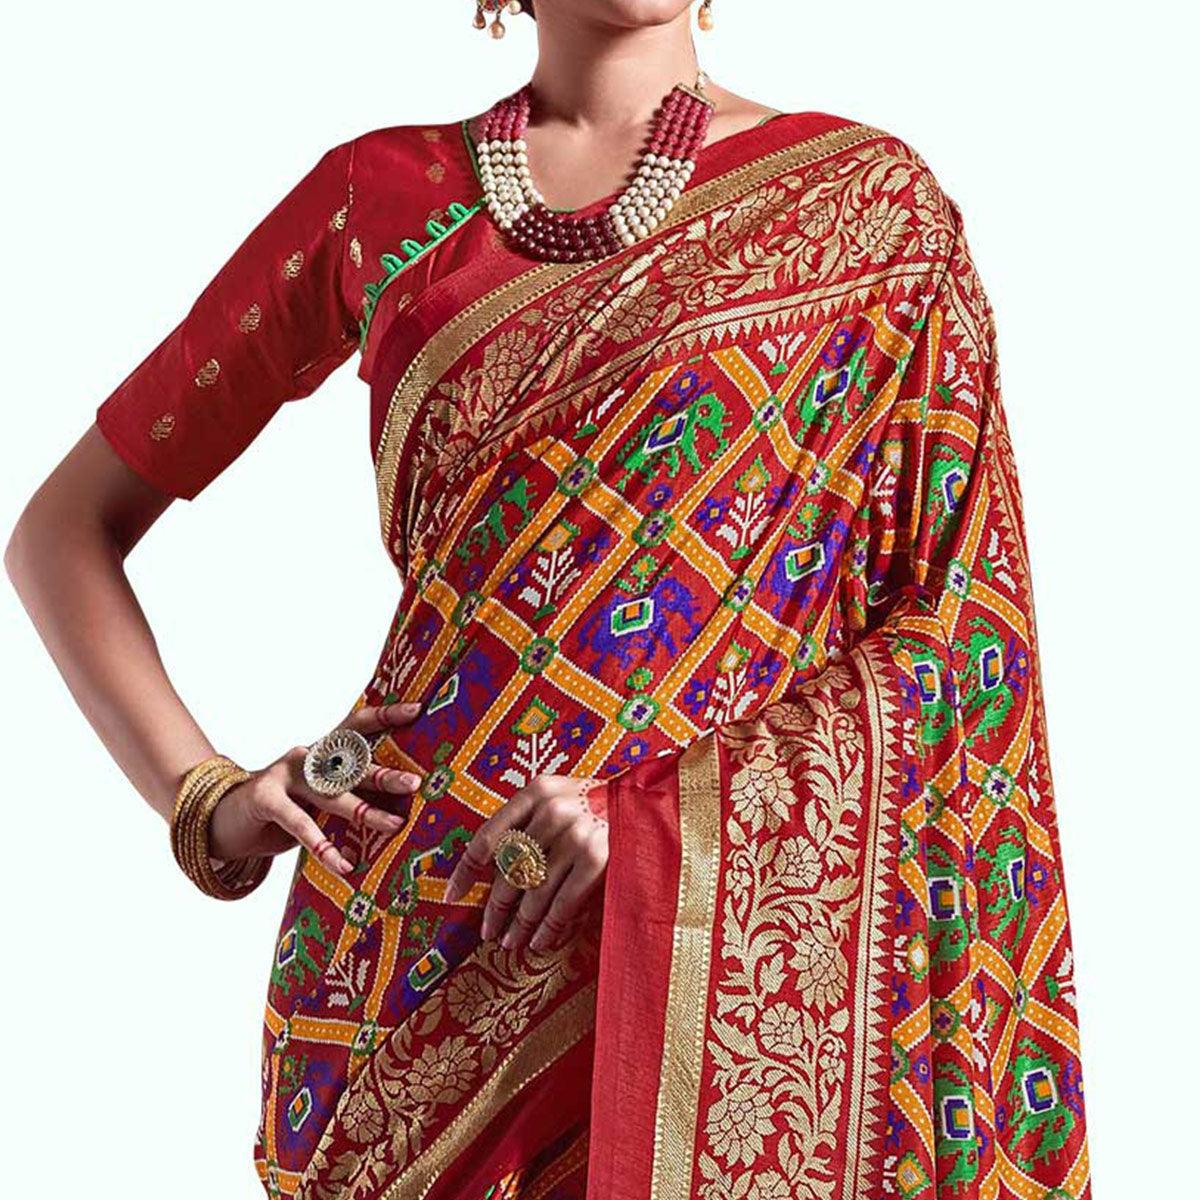 Desirable Red Colored Festive Wear Printed Kanjivaram Silk Saree - Peachmode